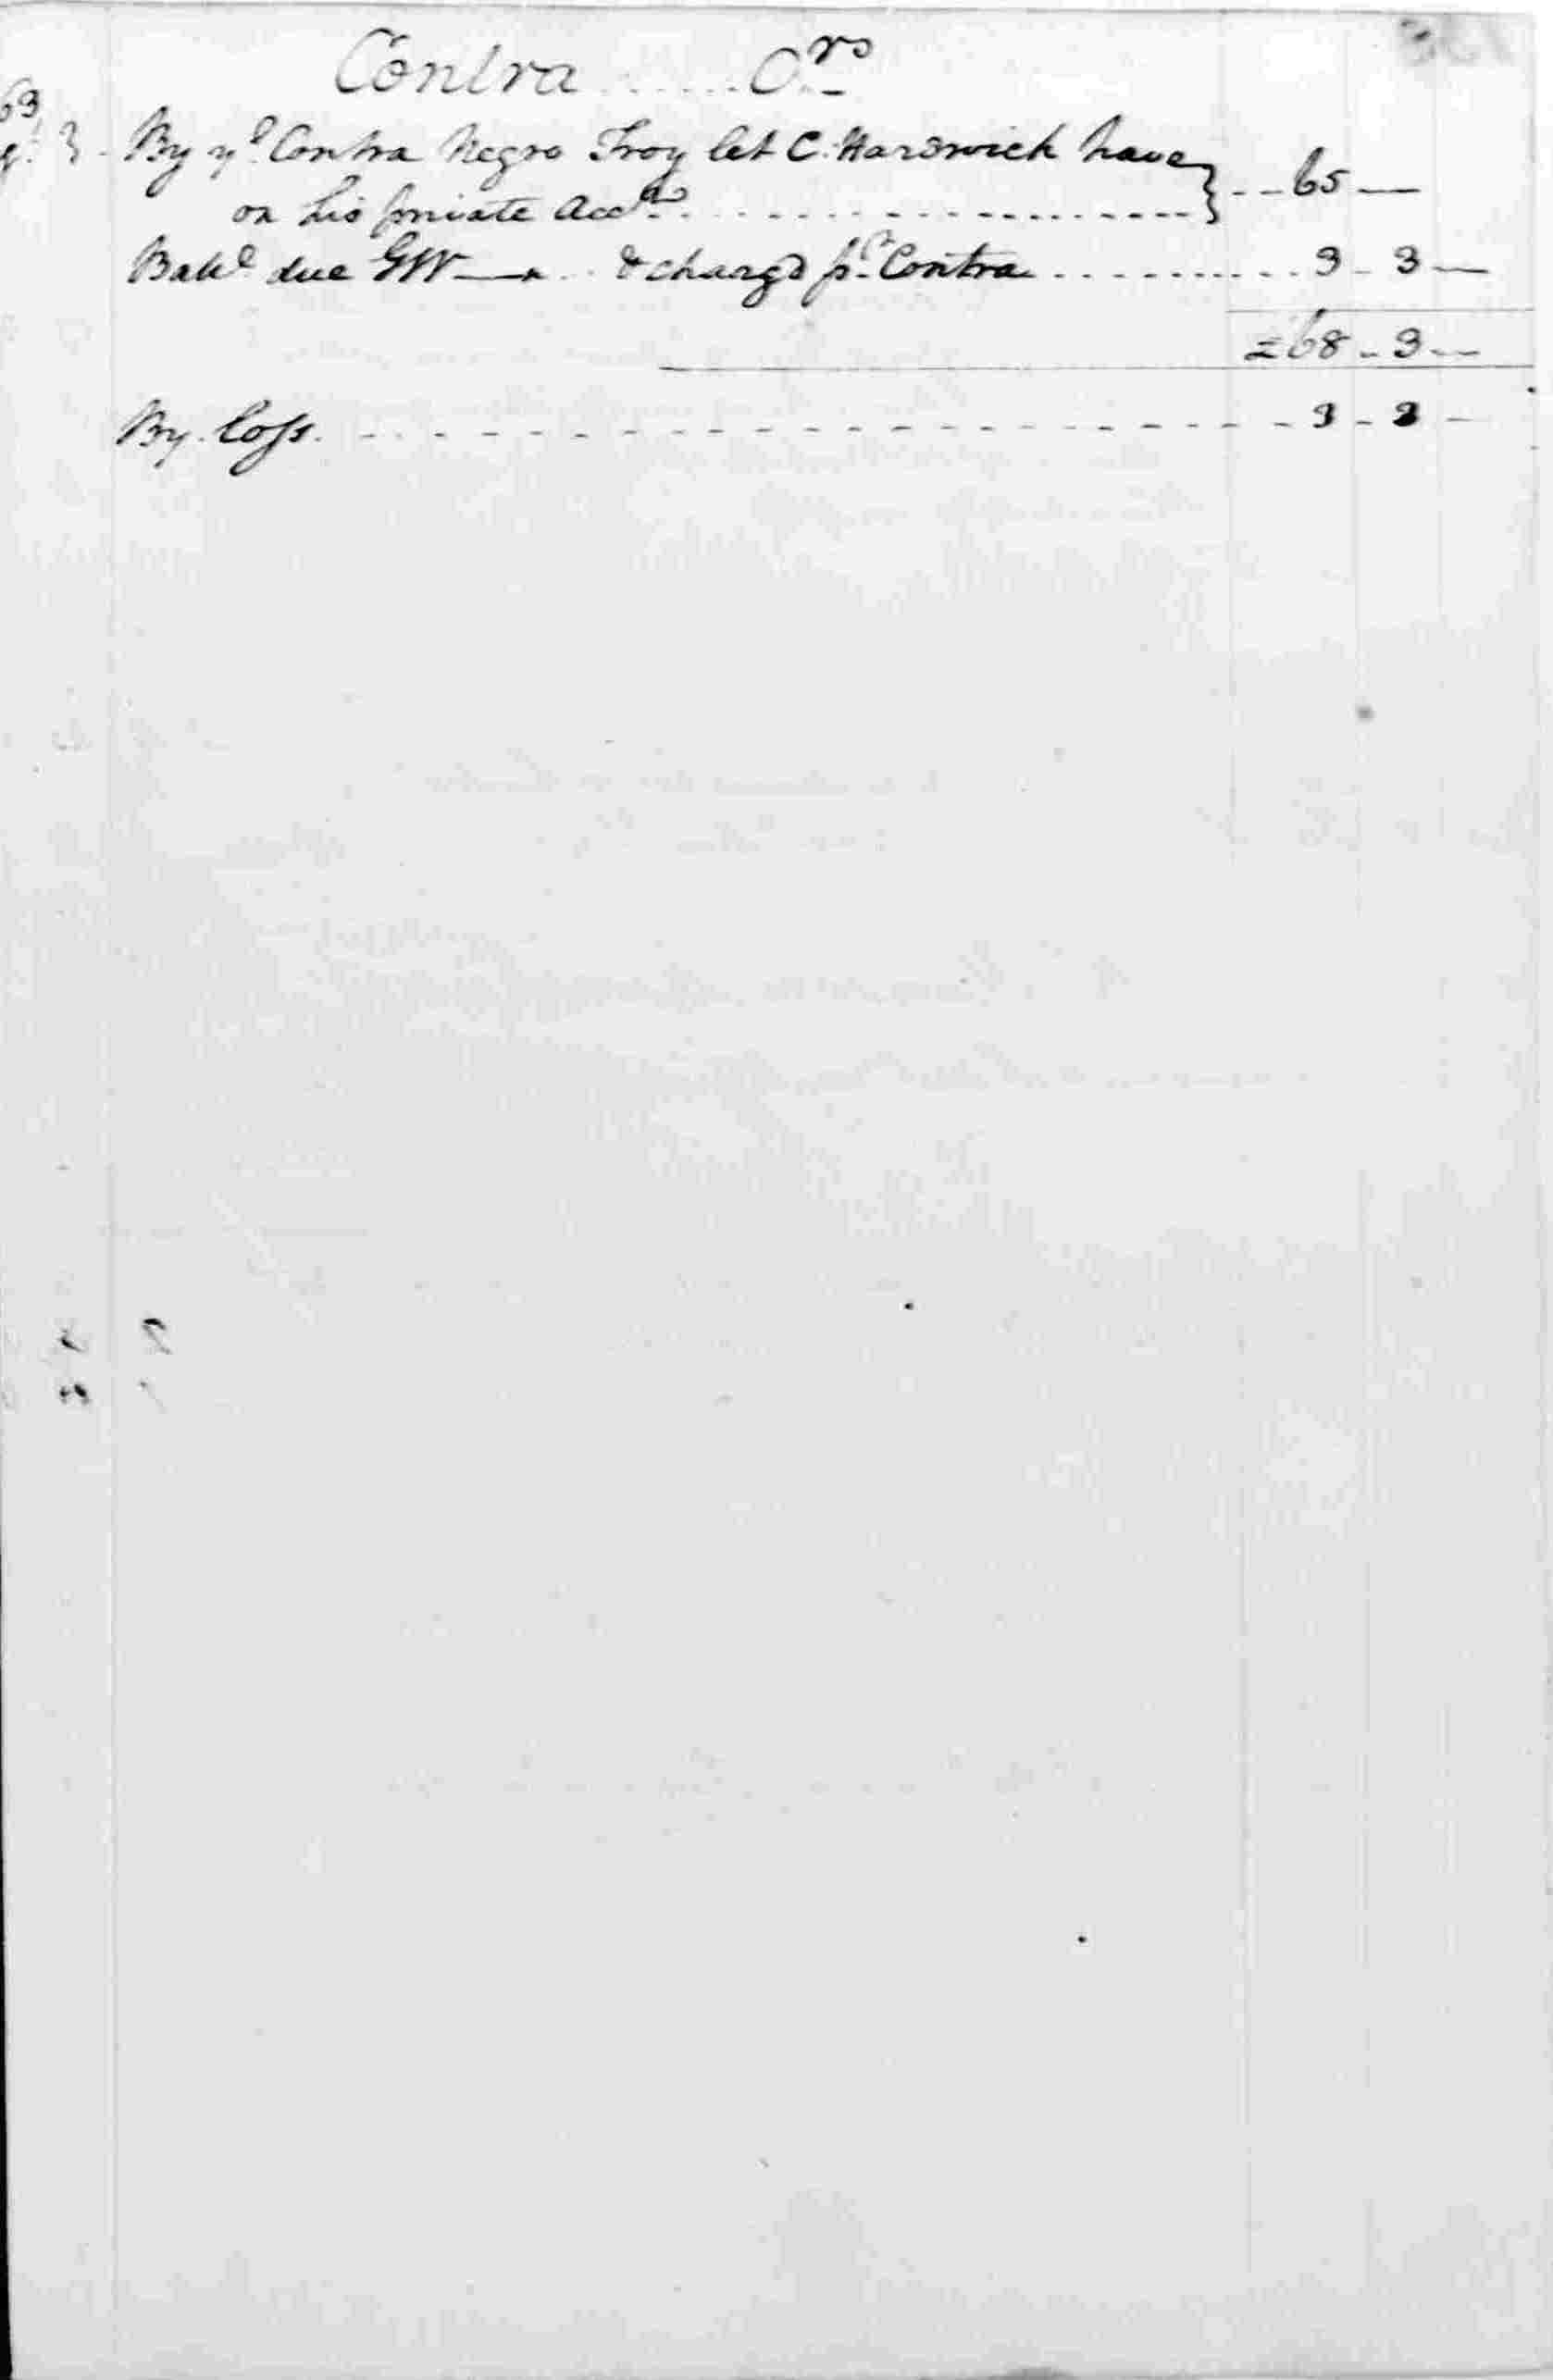 Ledger A, folio 138, right side